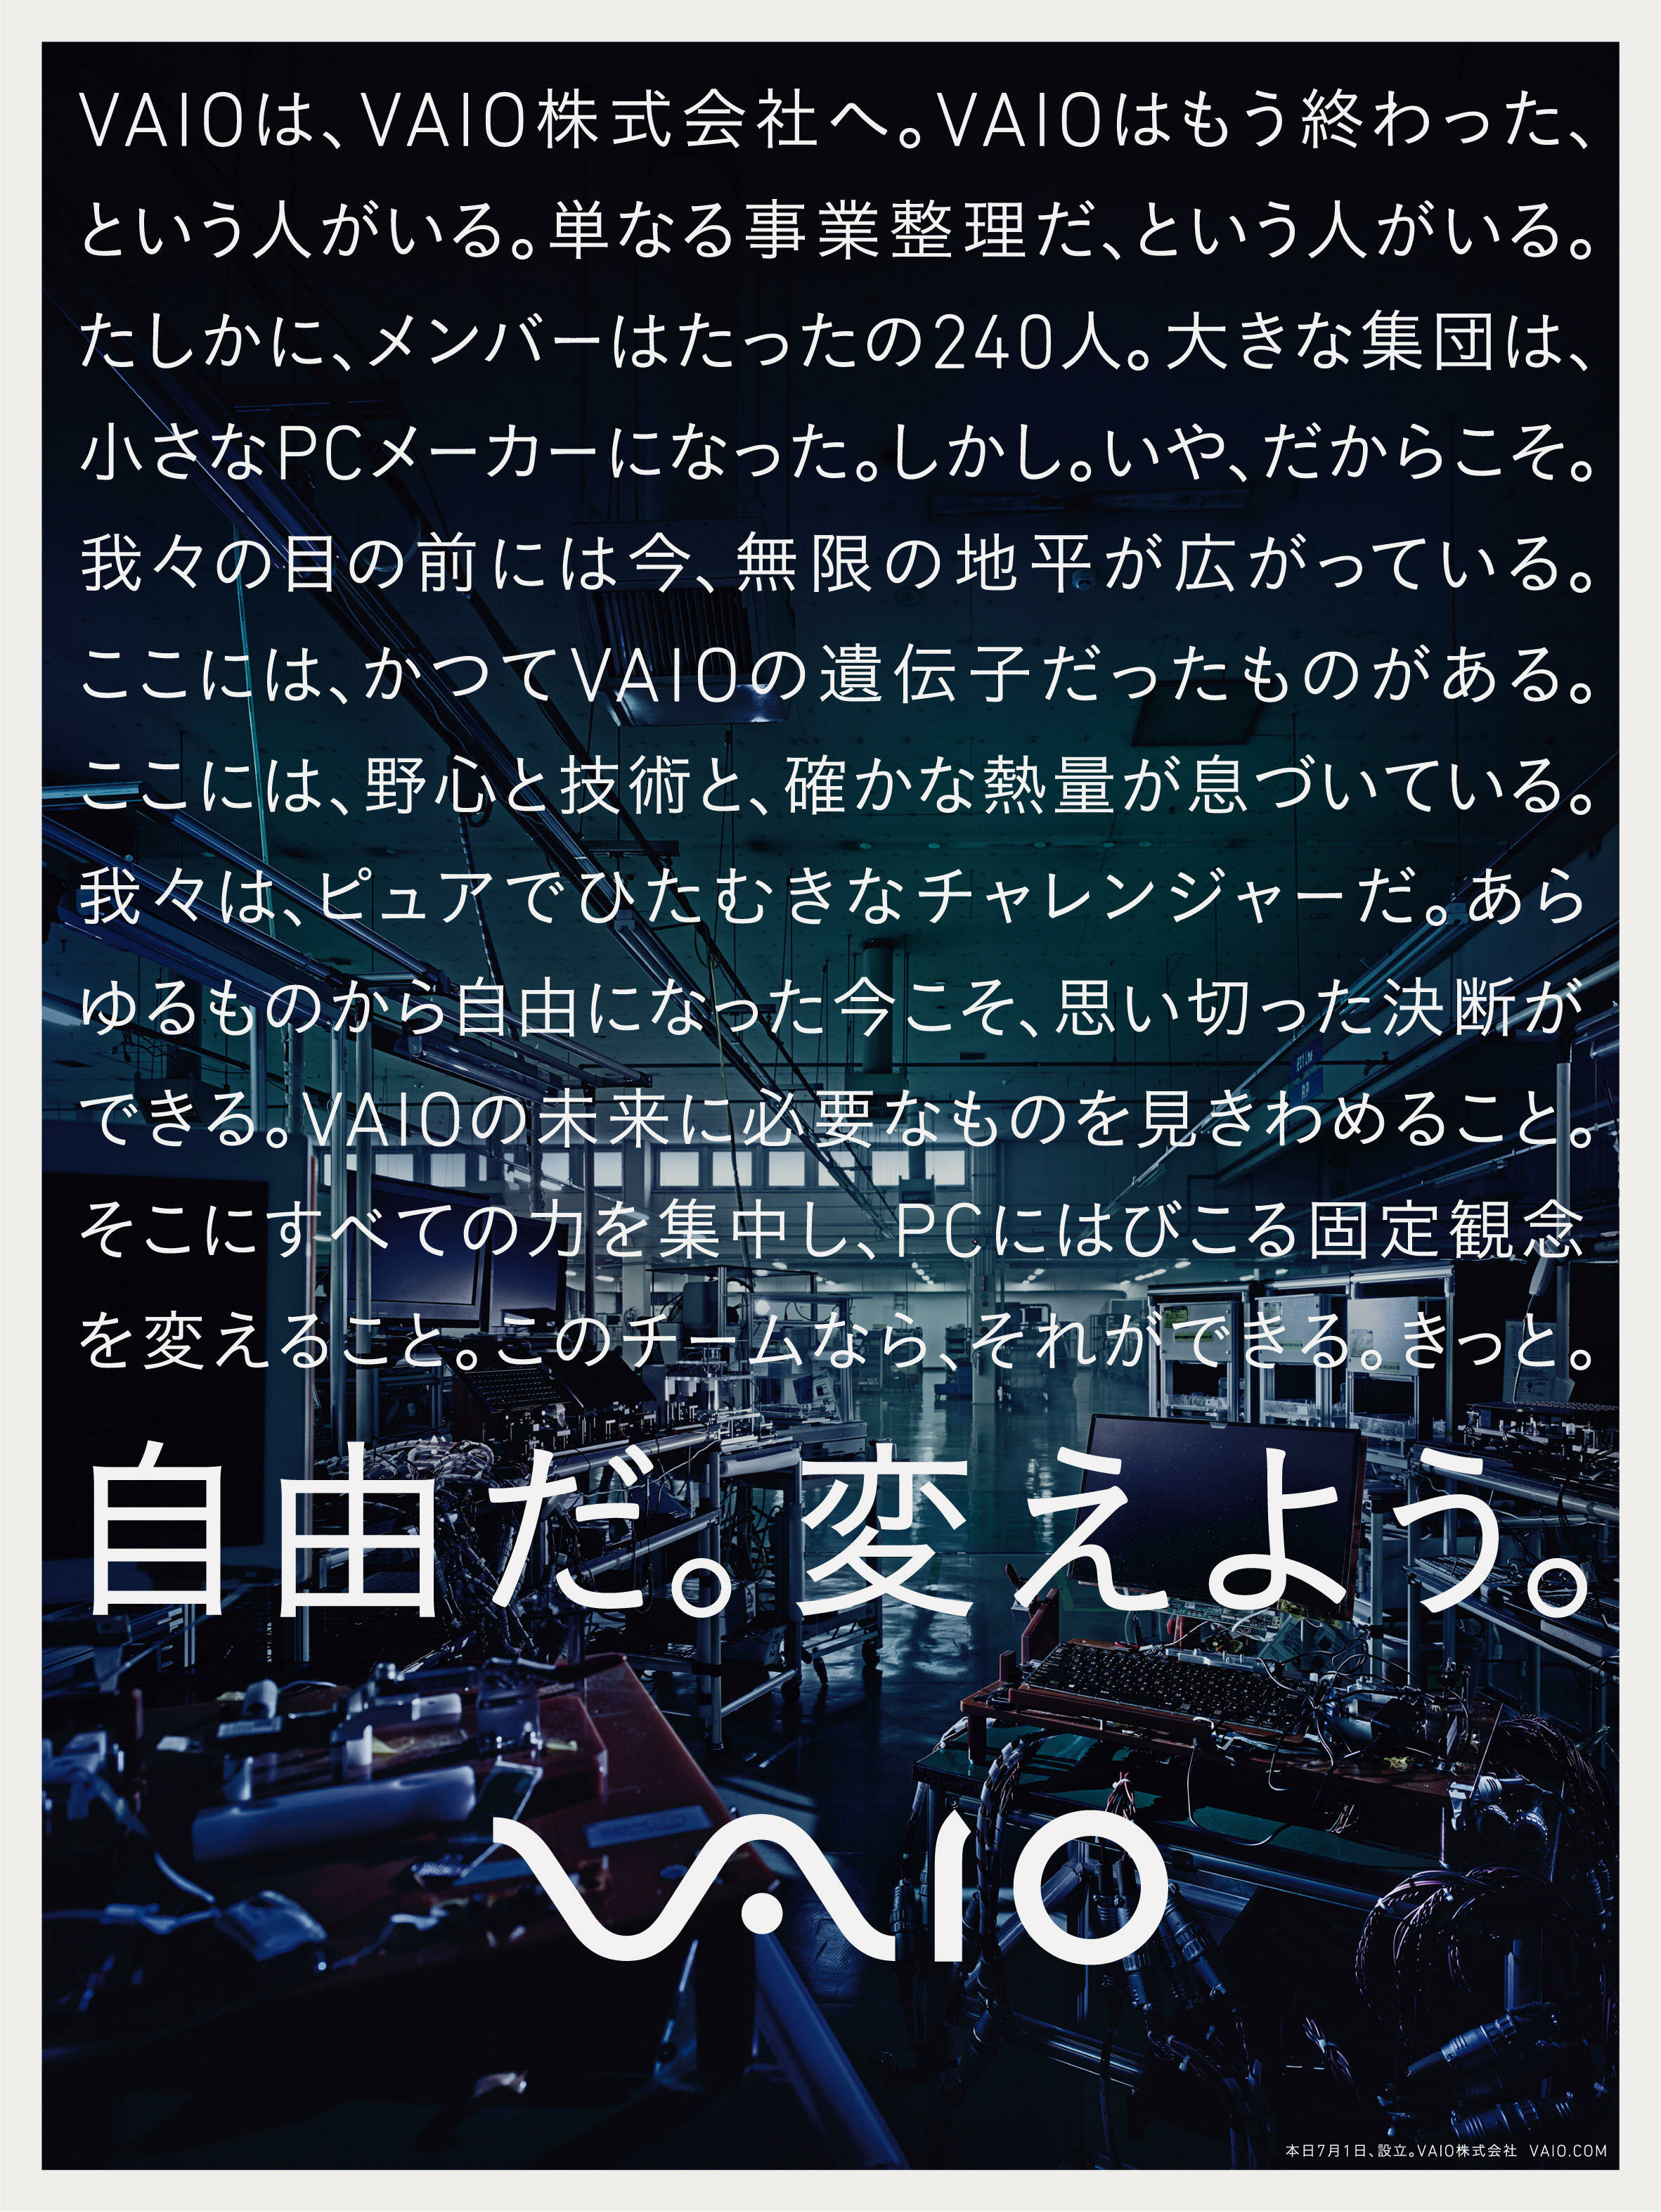 VAIO Branding 新聞広告